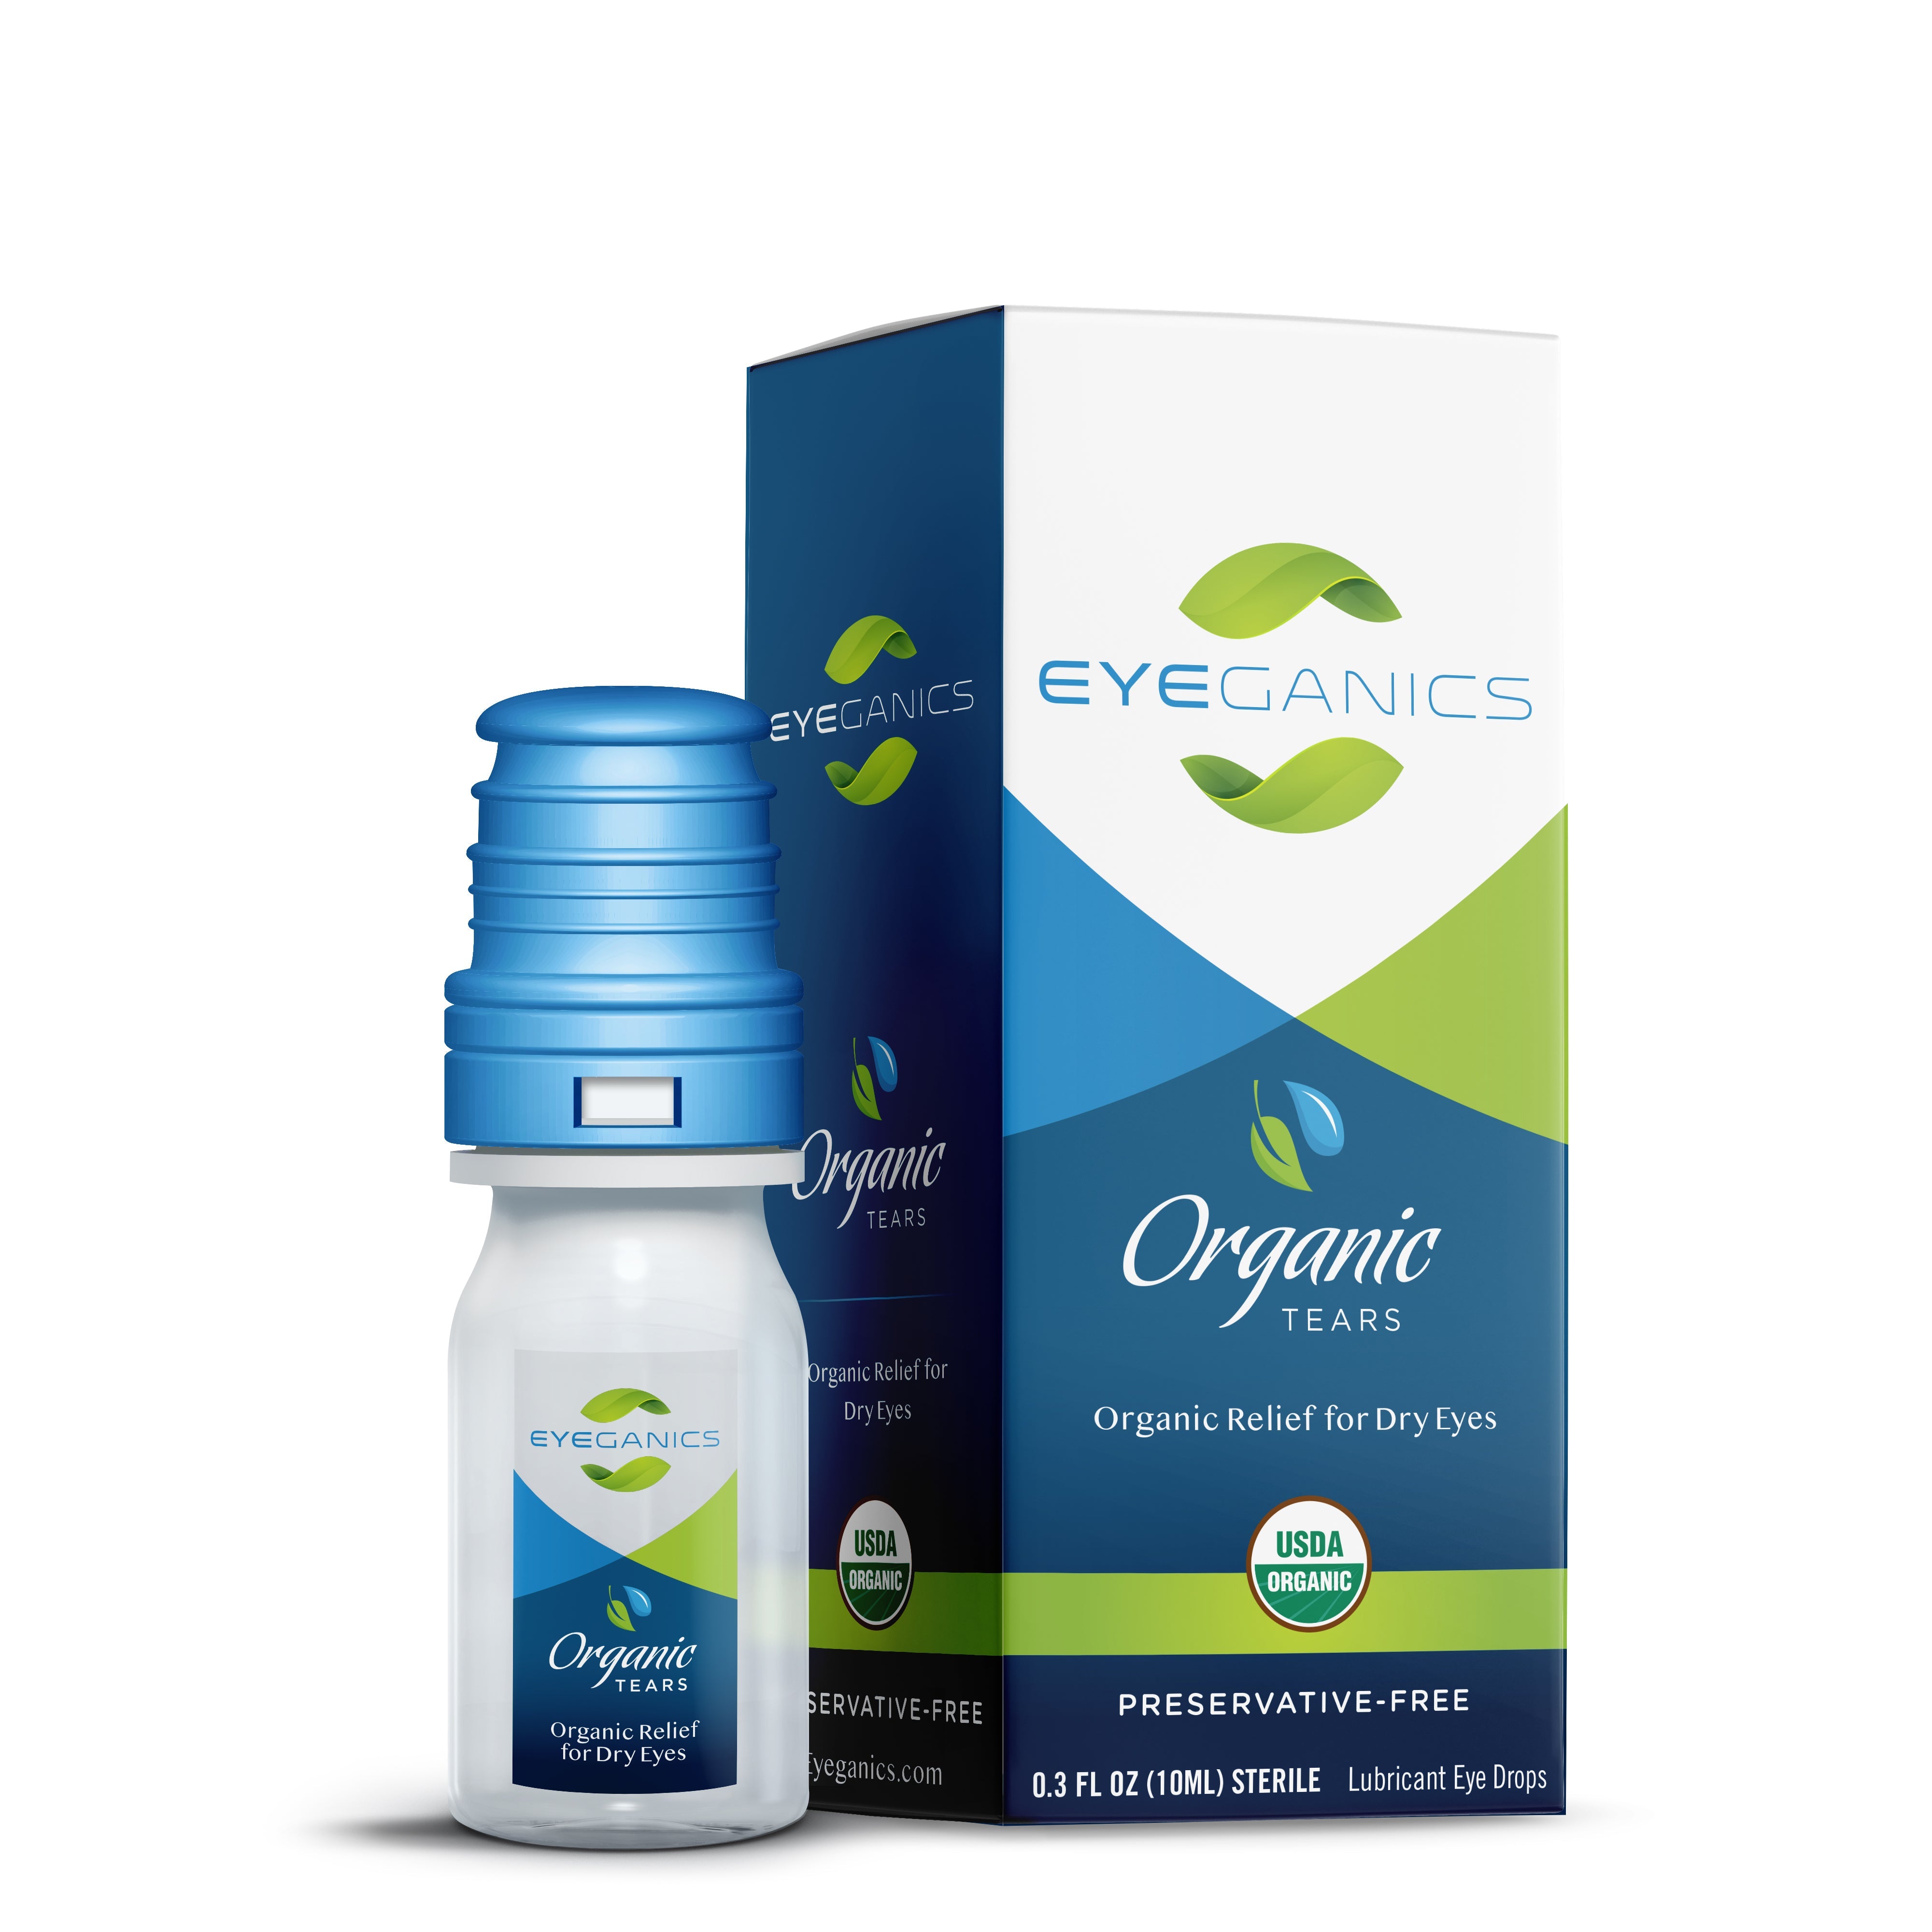 Refresh Tears Lubricant Eye Drops - 2 pack, 0.5 fl oz droppers